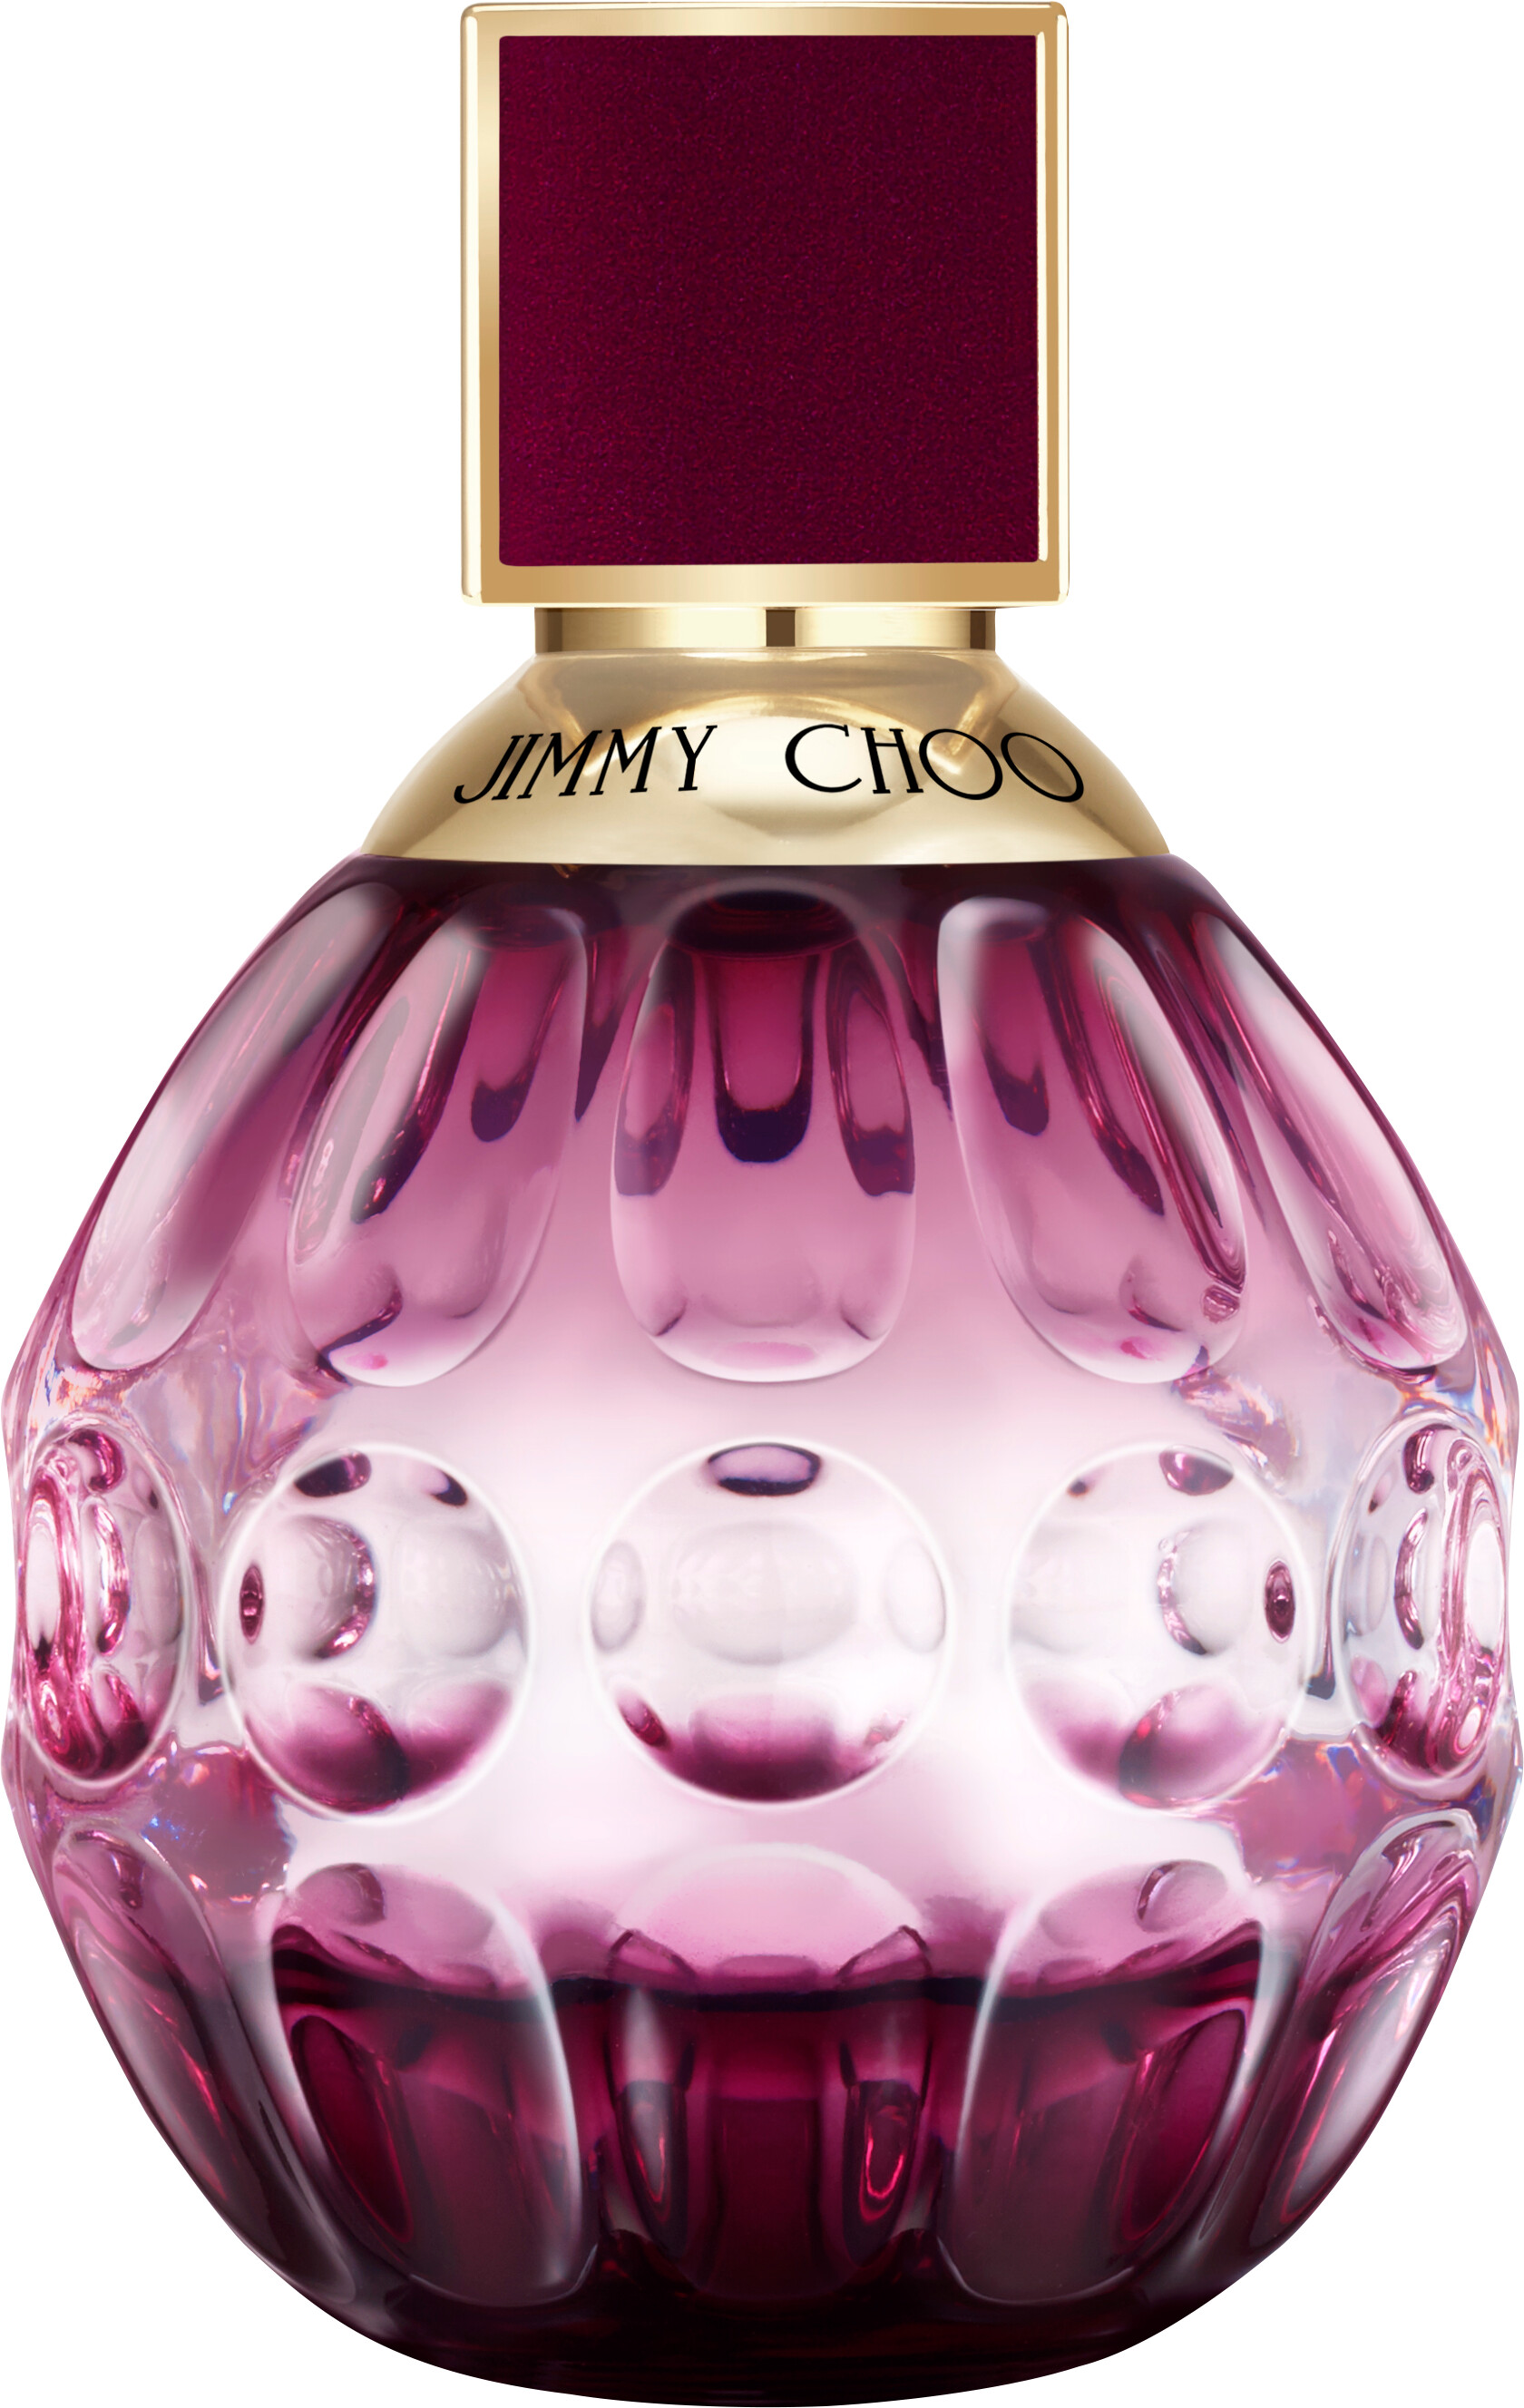 Jimmy Choo Fever Eau de Parfum Spray 60ml